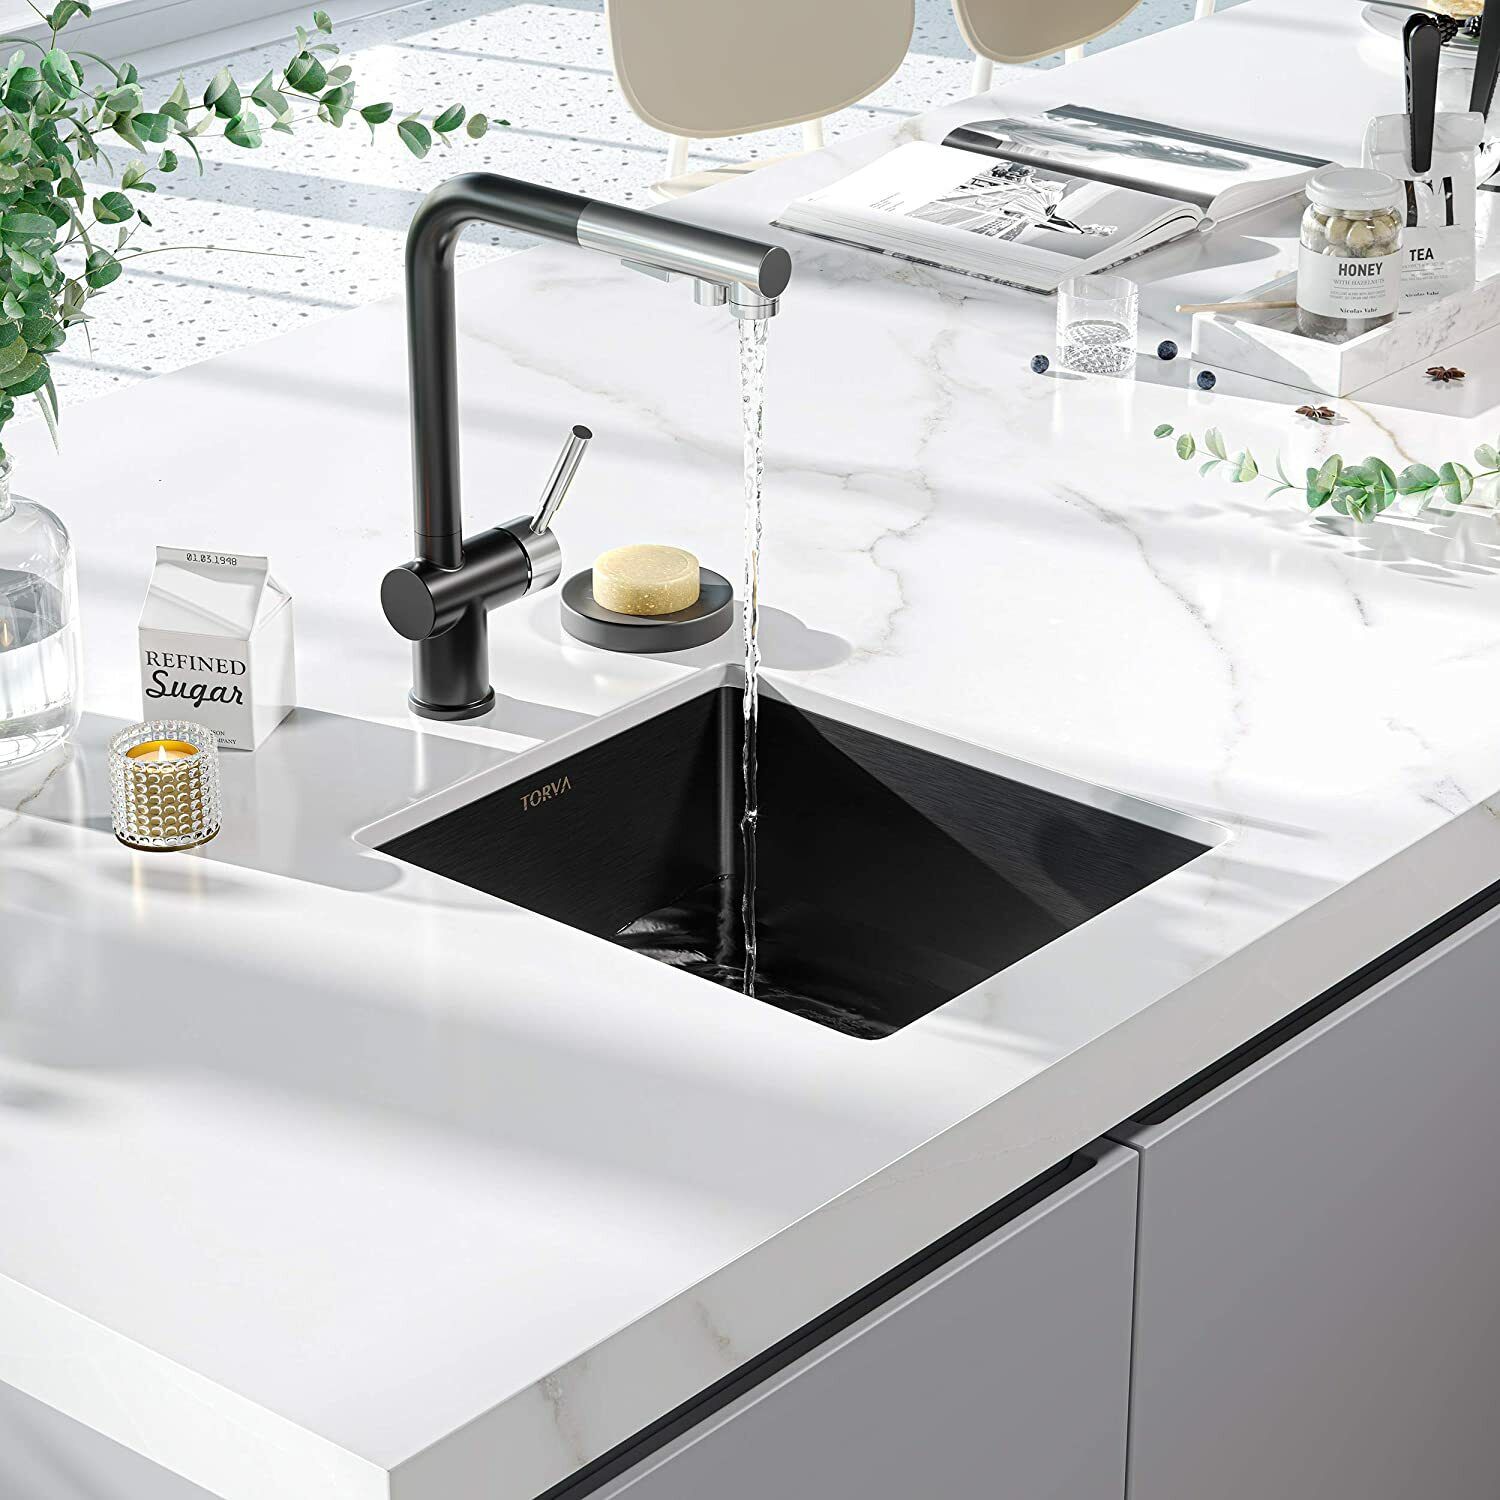 Torva 14" X 14" Gloss Black Ceramic Coating With Nanotek Undermount Kitchen Sink